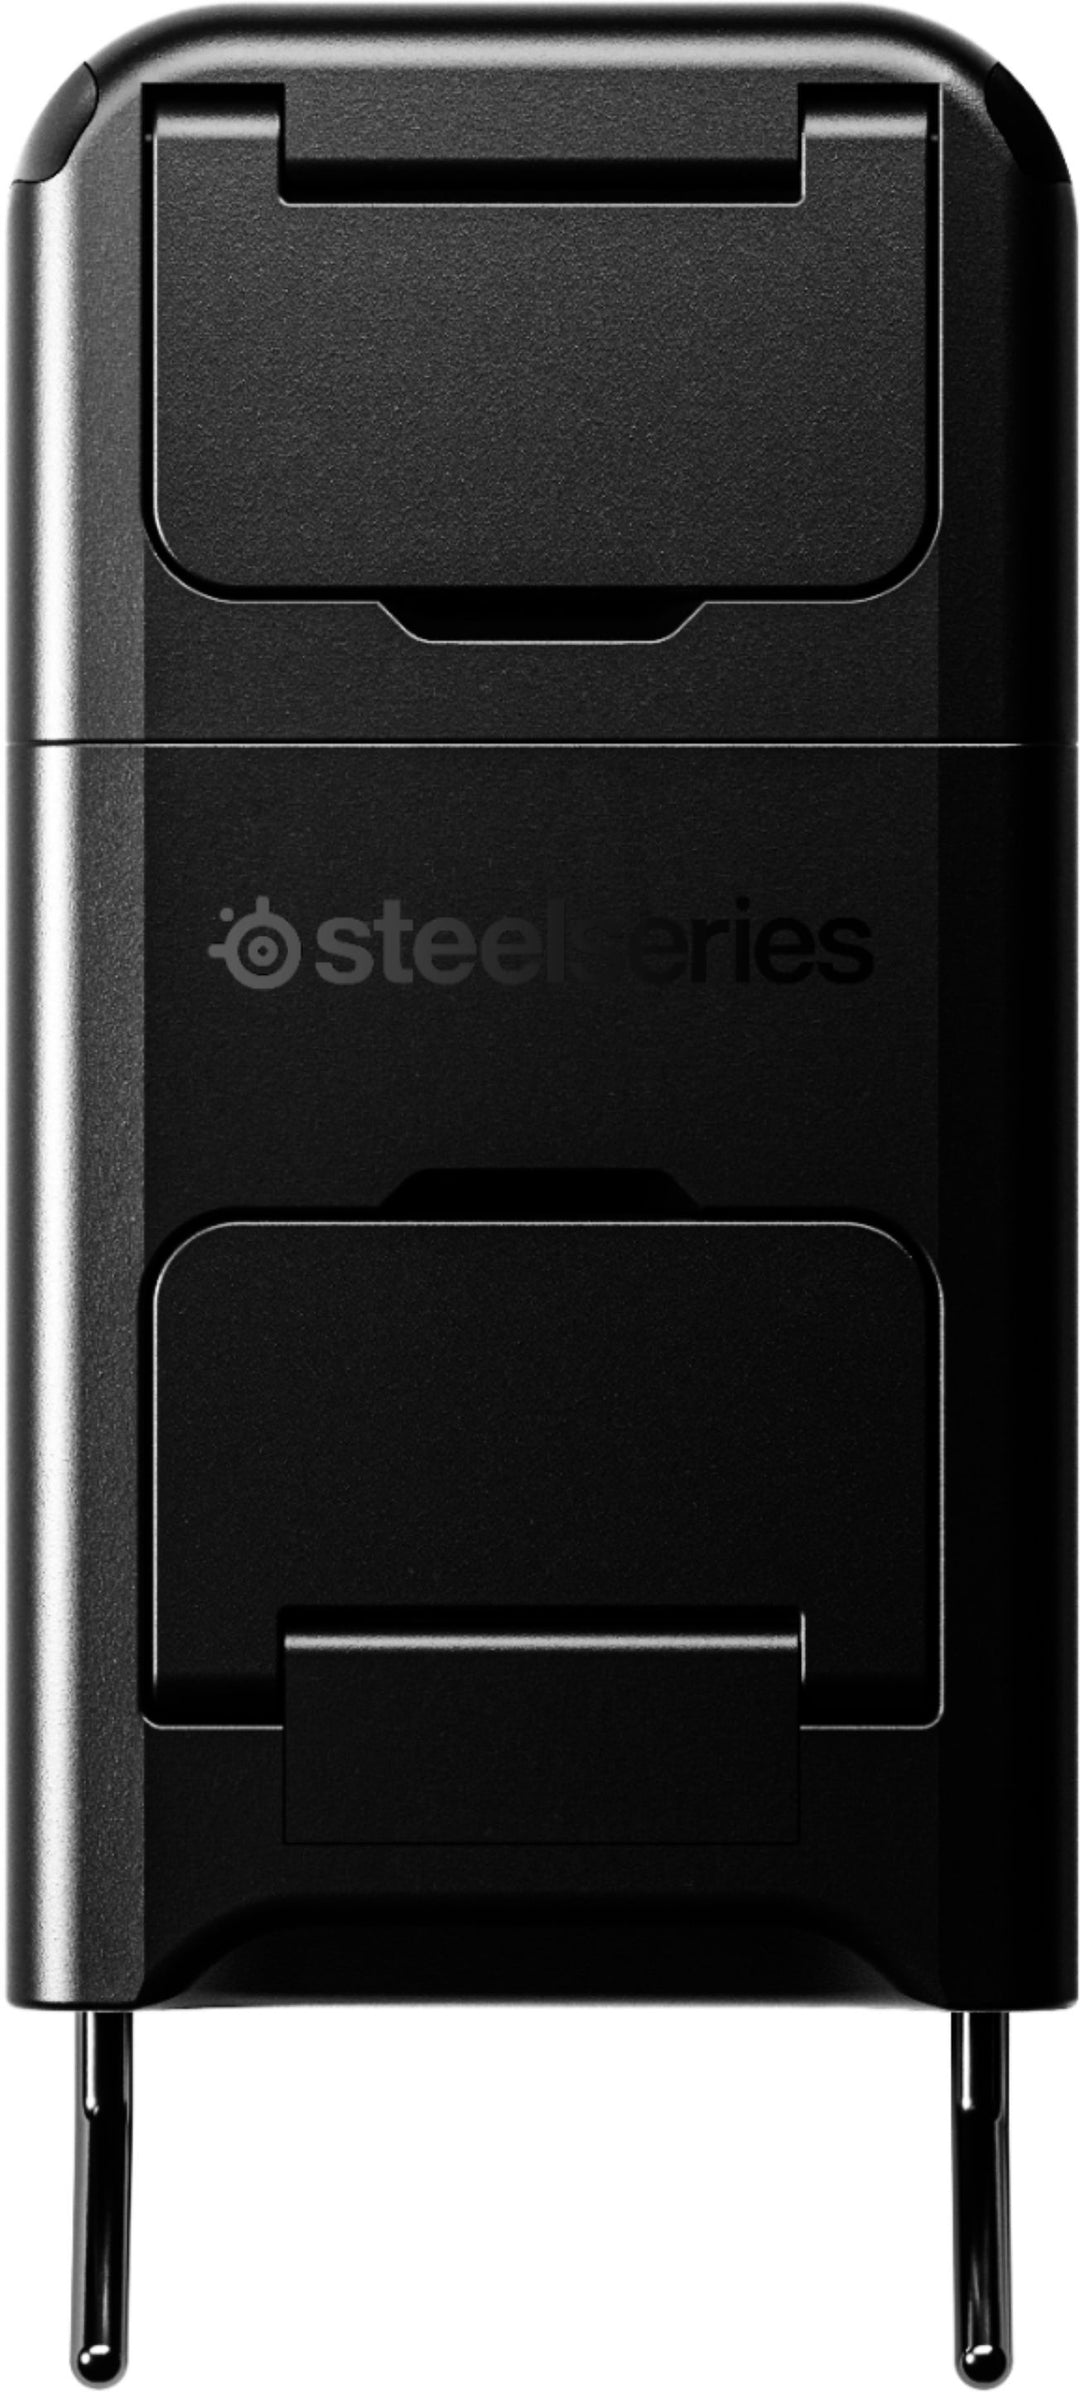 SteelSeries - Nimbus+ Wireless Gaming Controller for Apple iOS, iPadOS, tvOS Devices - Black_3